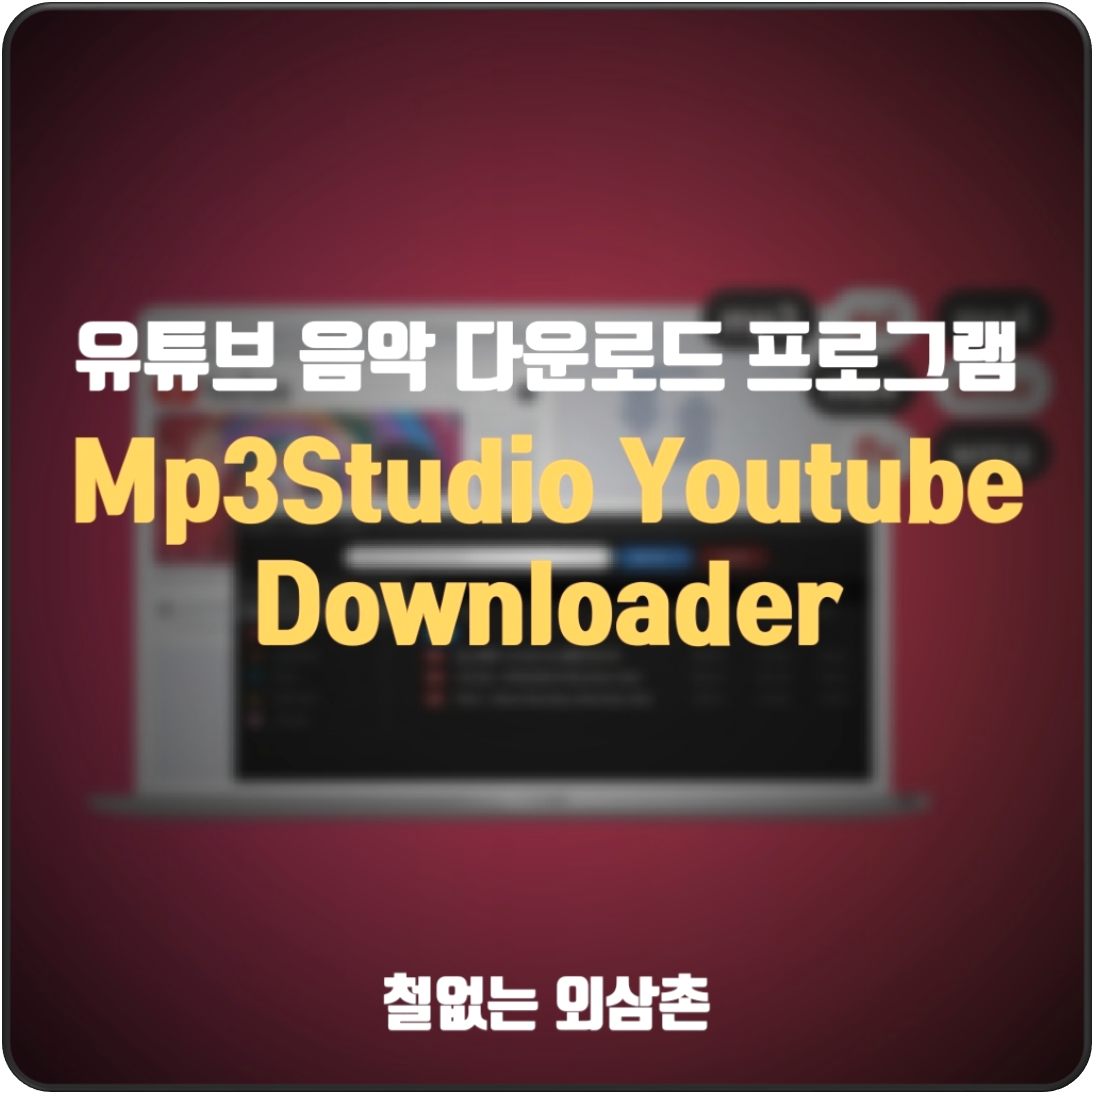 instal the last version for apple MP3Studio YouTube Downloader 2.0.23